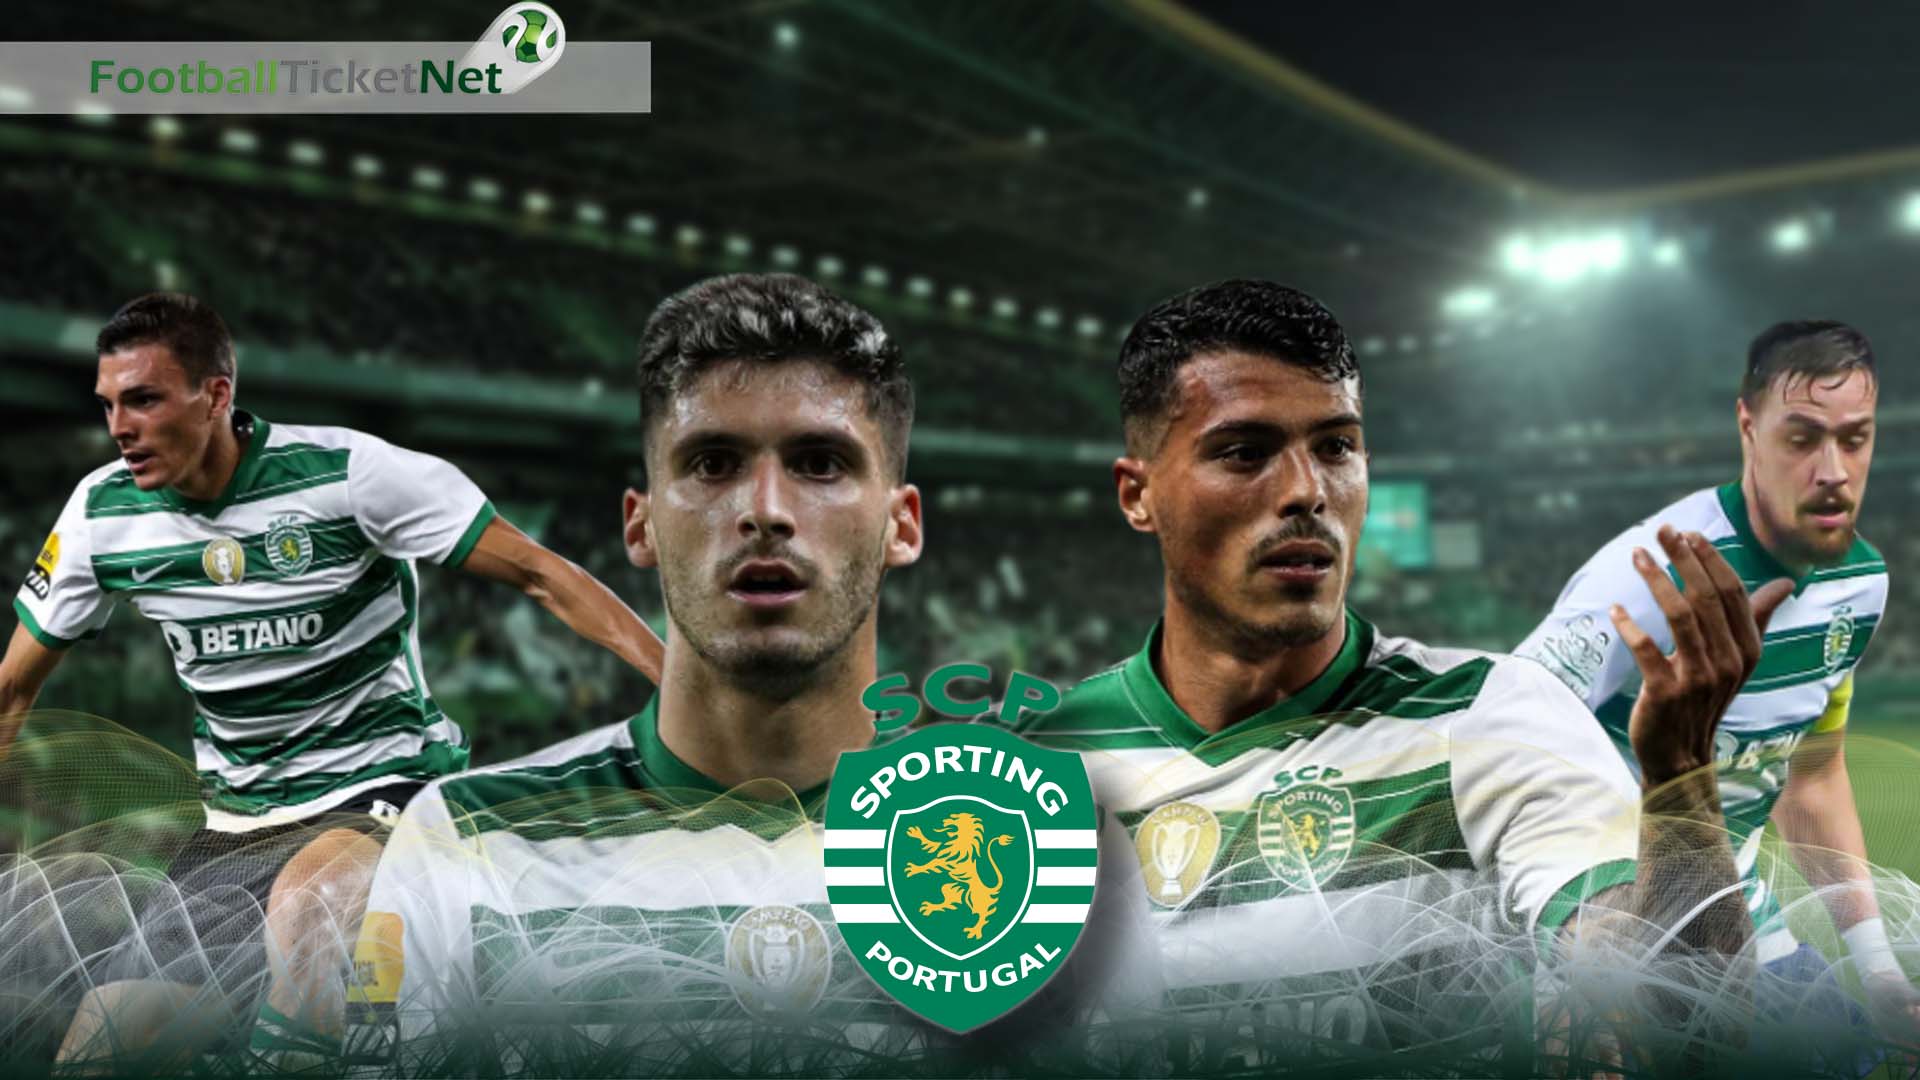 Sporting Lisbon Tickets 2019/20 Season | Football Ticket Net